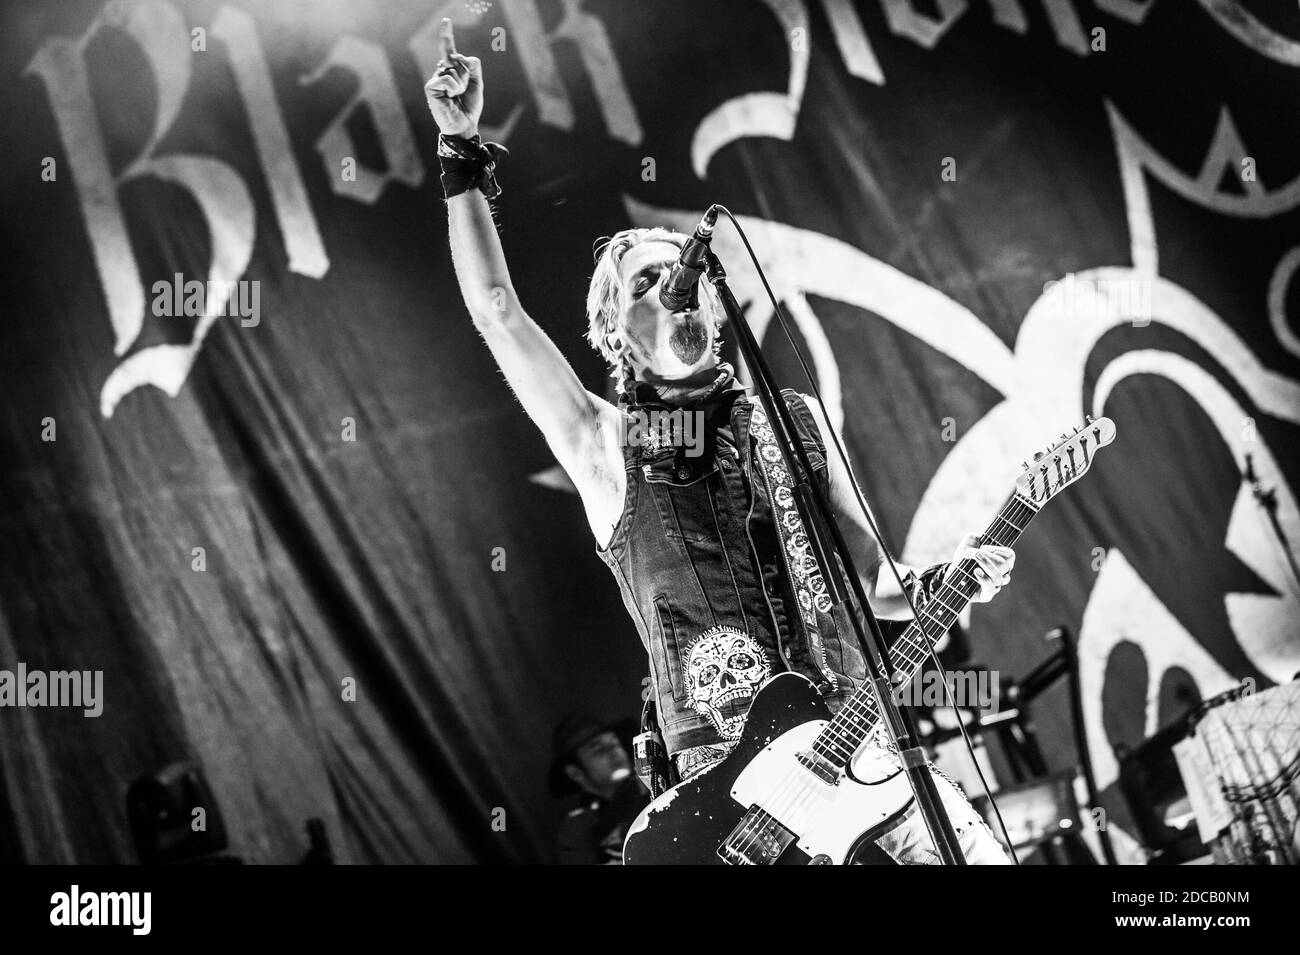 Black Stone Cherry live in Concert Stock Photo Alamy